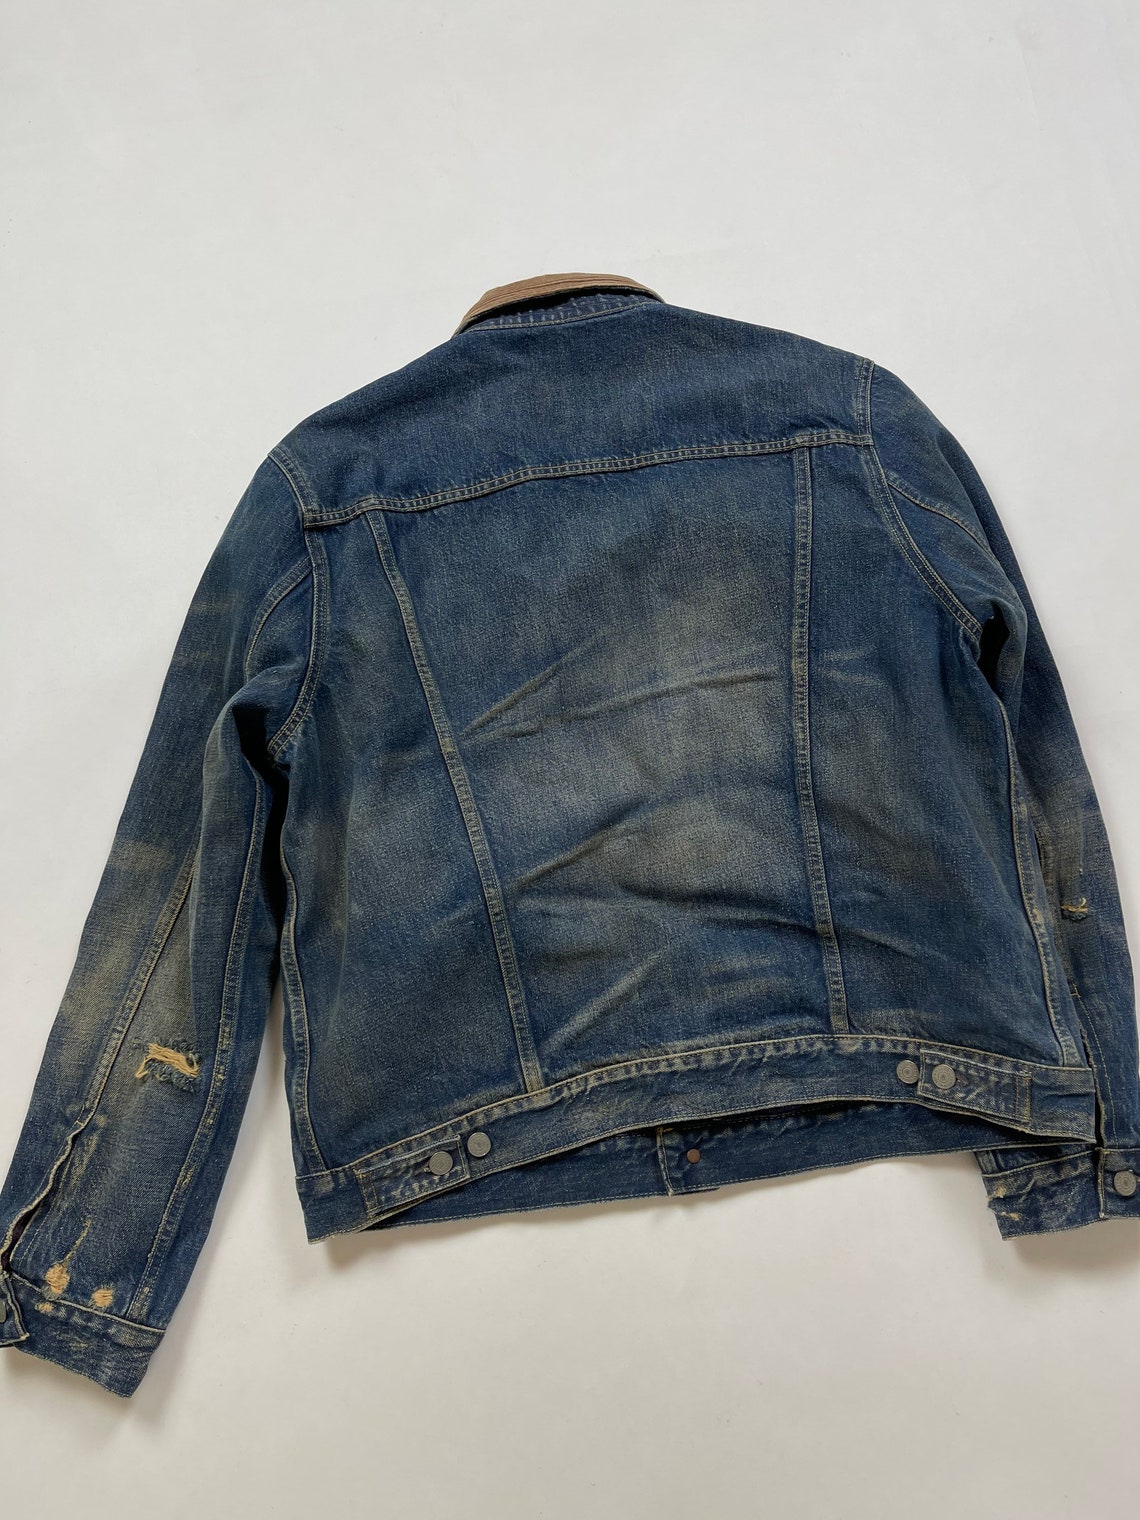 RRL polo Ralph Lauren vintage 90s denim jacket | Etsy